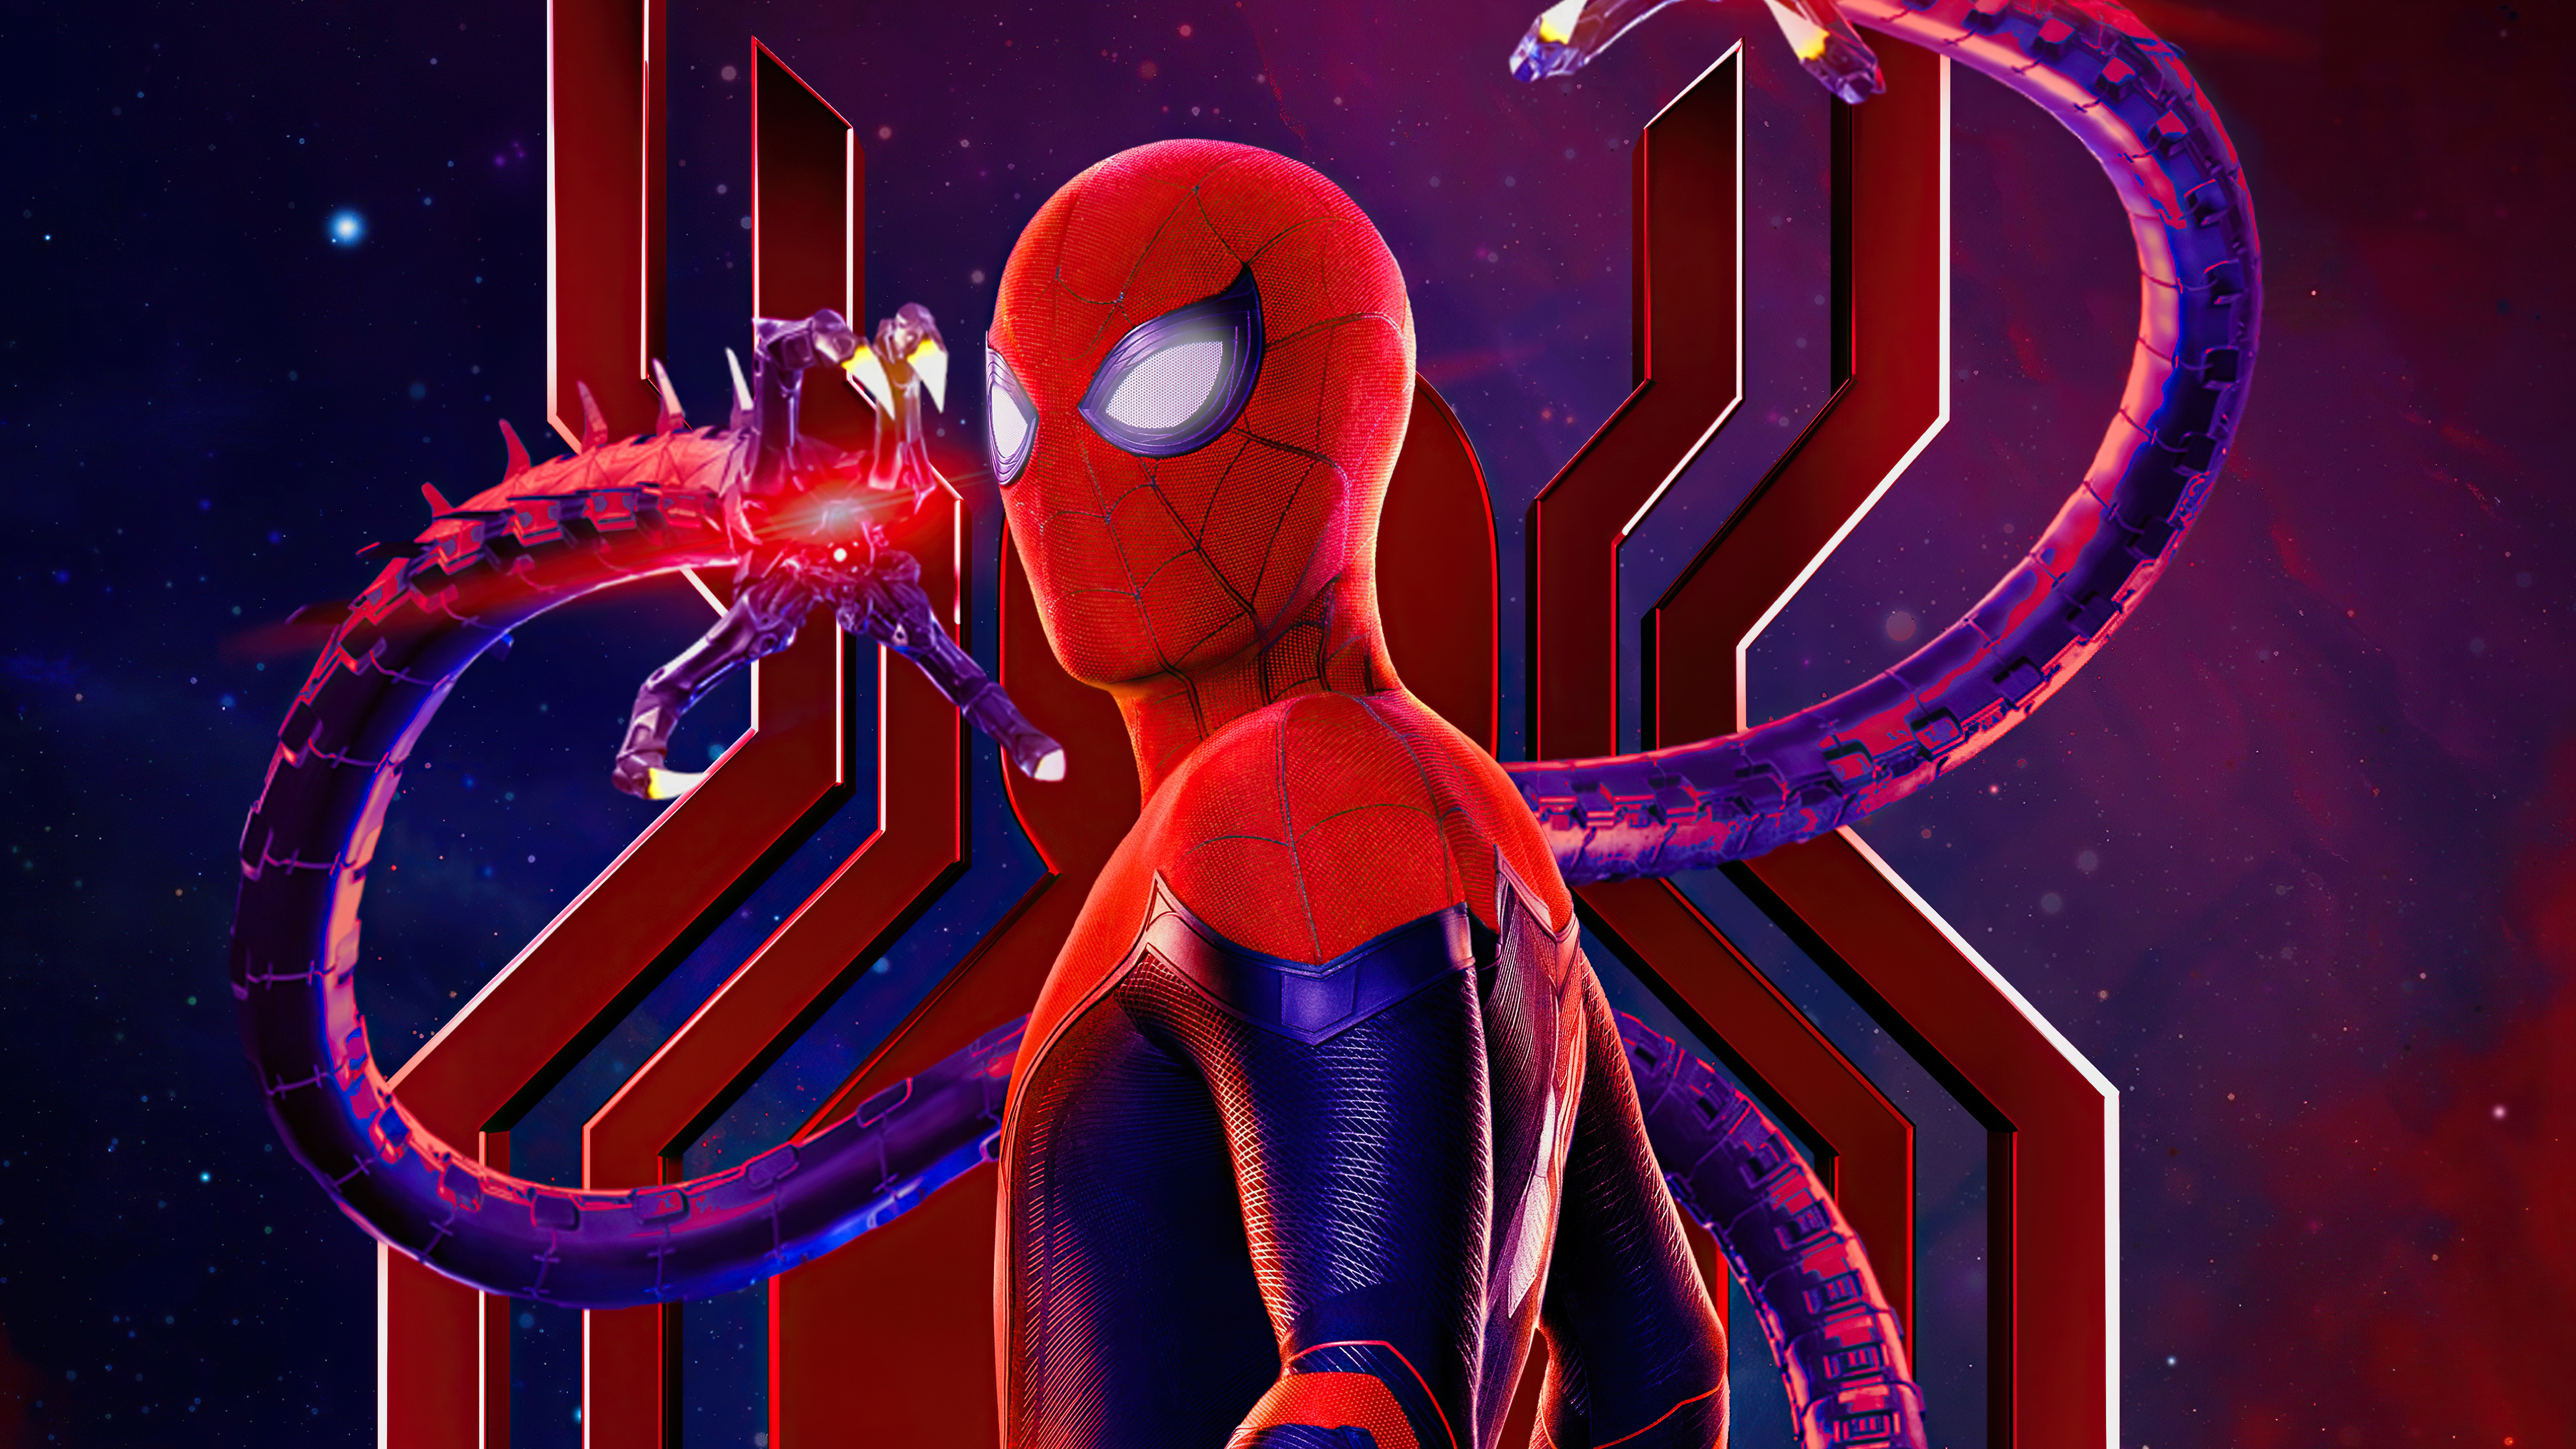 Spider-Man: No Way Home 4k Ultra HD Wallpaper by VINDZ HENCHMAN